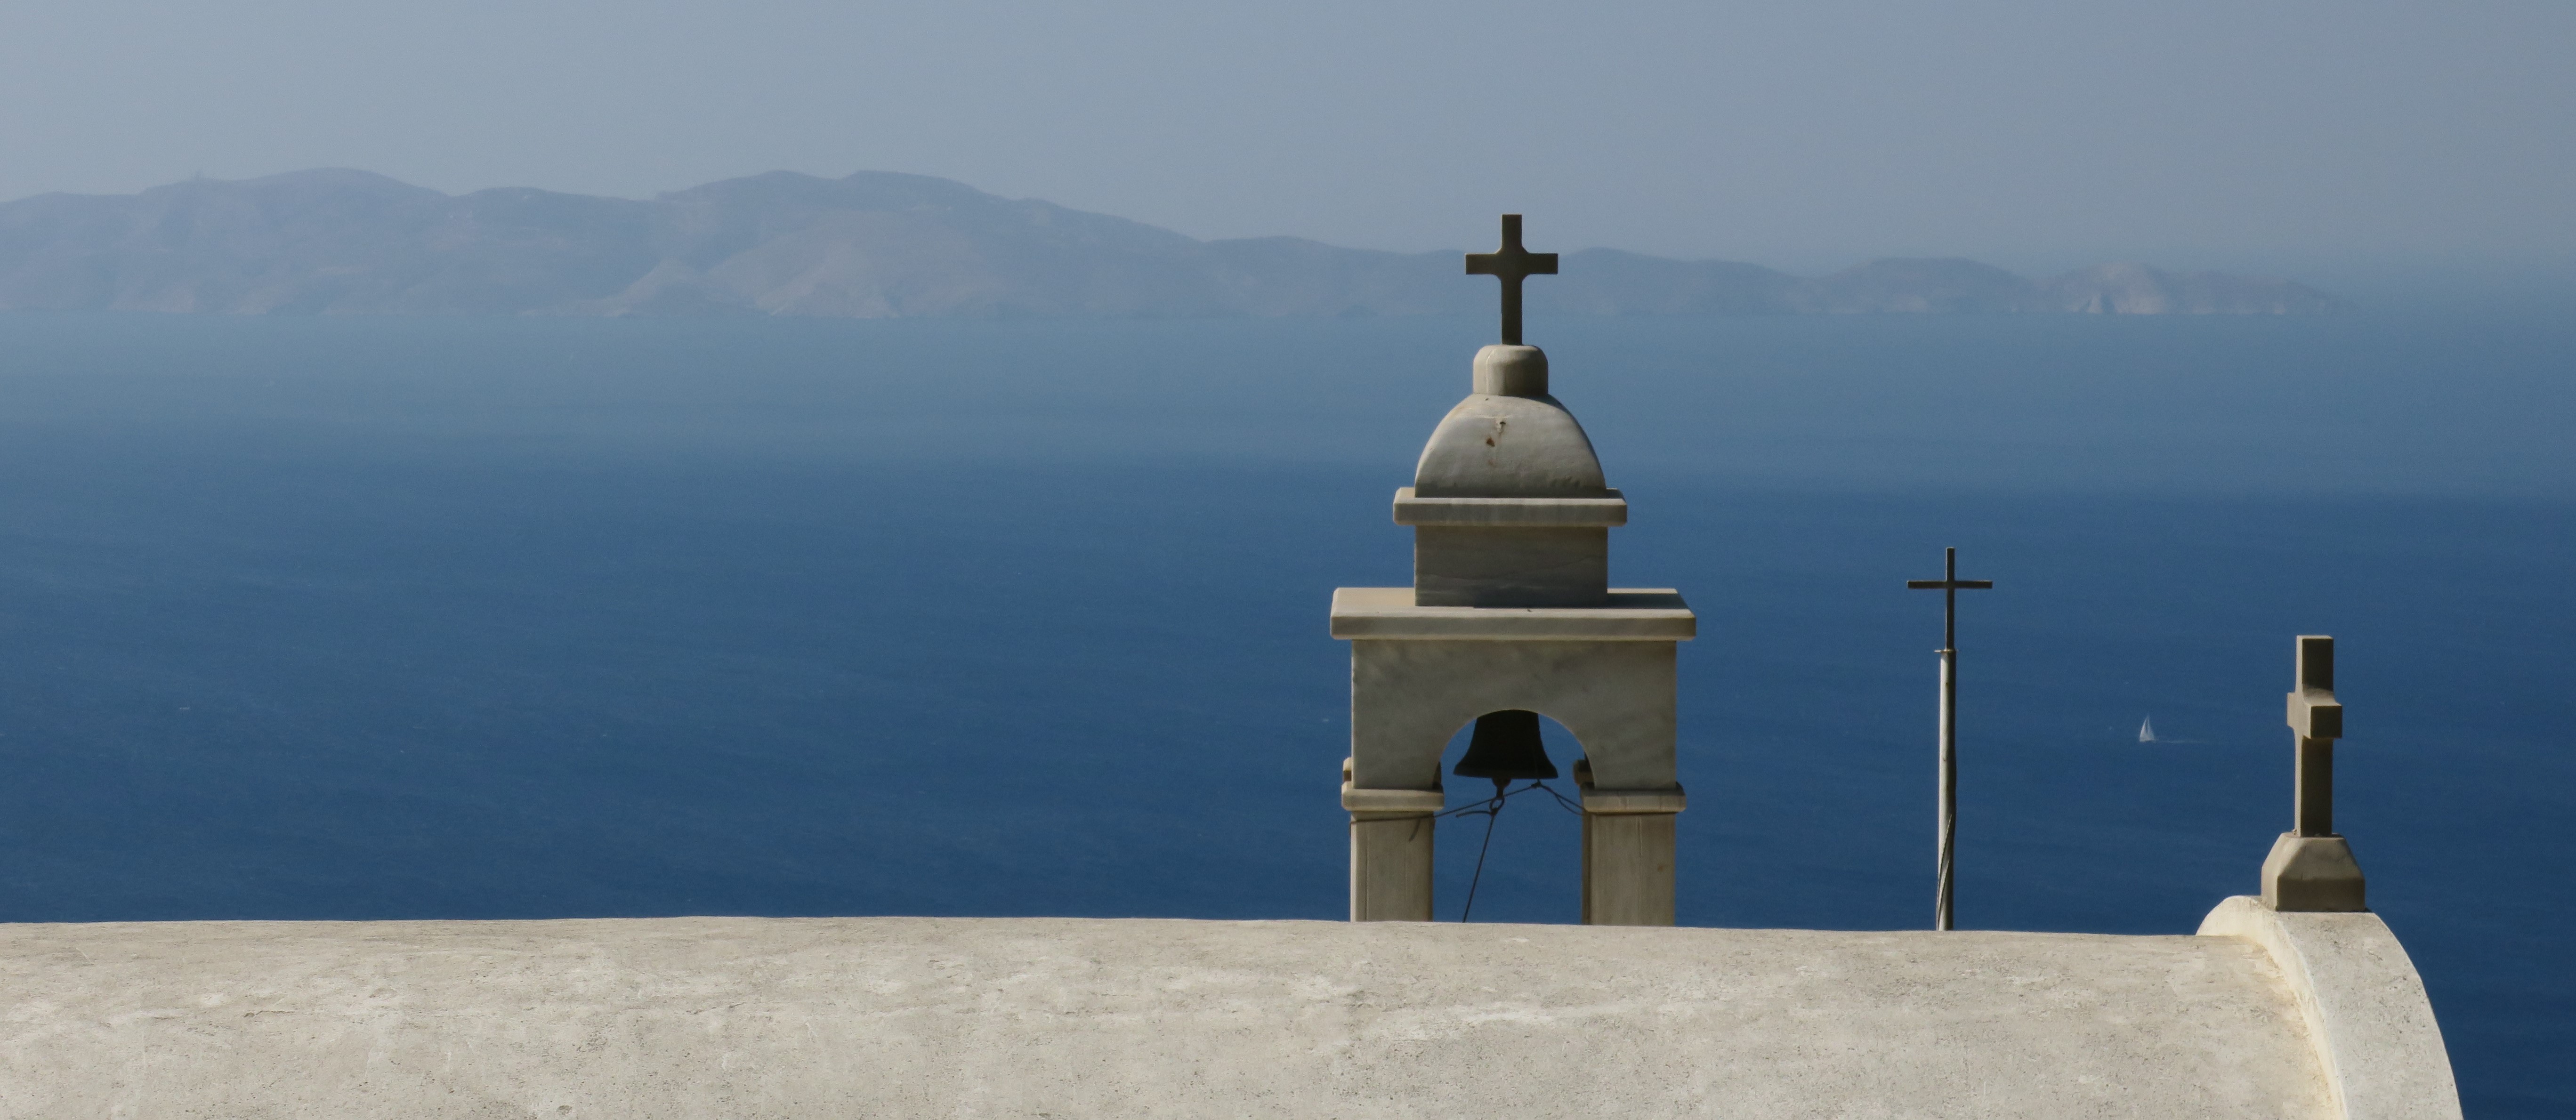 Tinos - L'île de Syros vue de Tinos © François Ribard